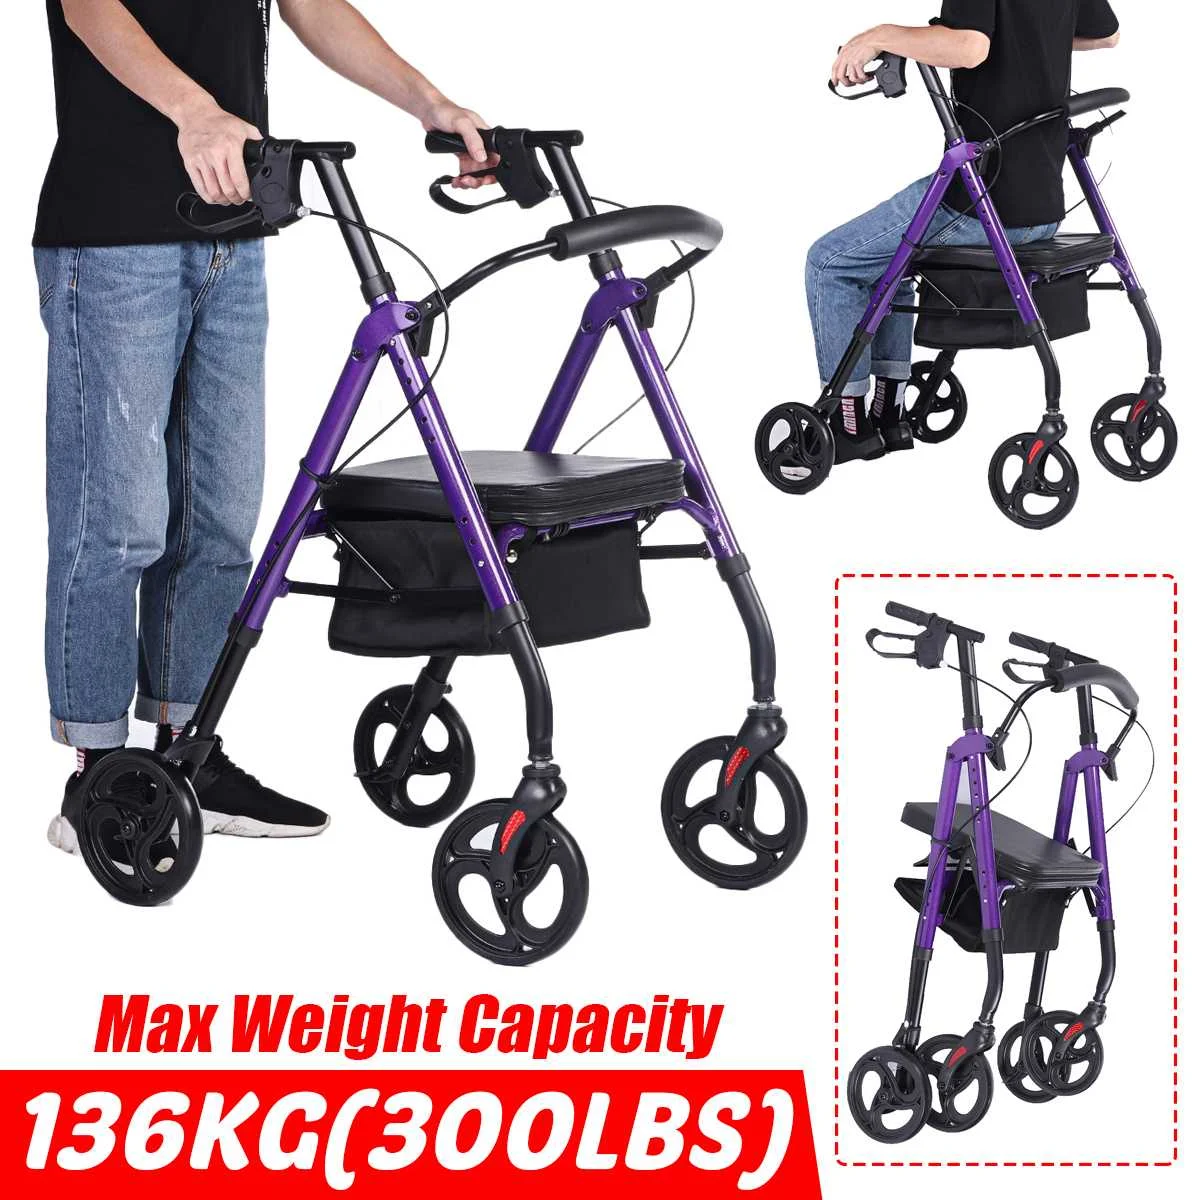 

BVSOIVIA 4 Wheel Seat Rolling Foldable Walker Chair Rollator Foldable Adjustable Elderly Aid Backrest Elderly Mobility Walking A